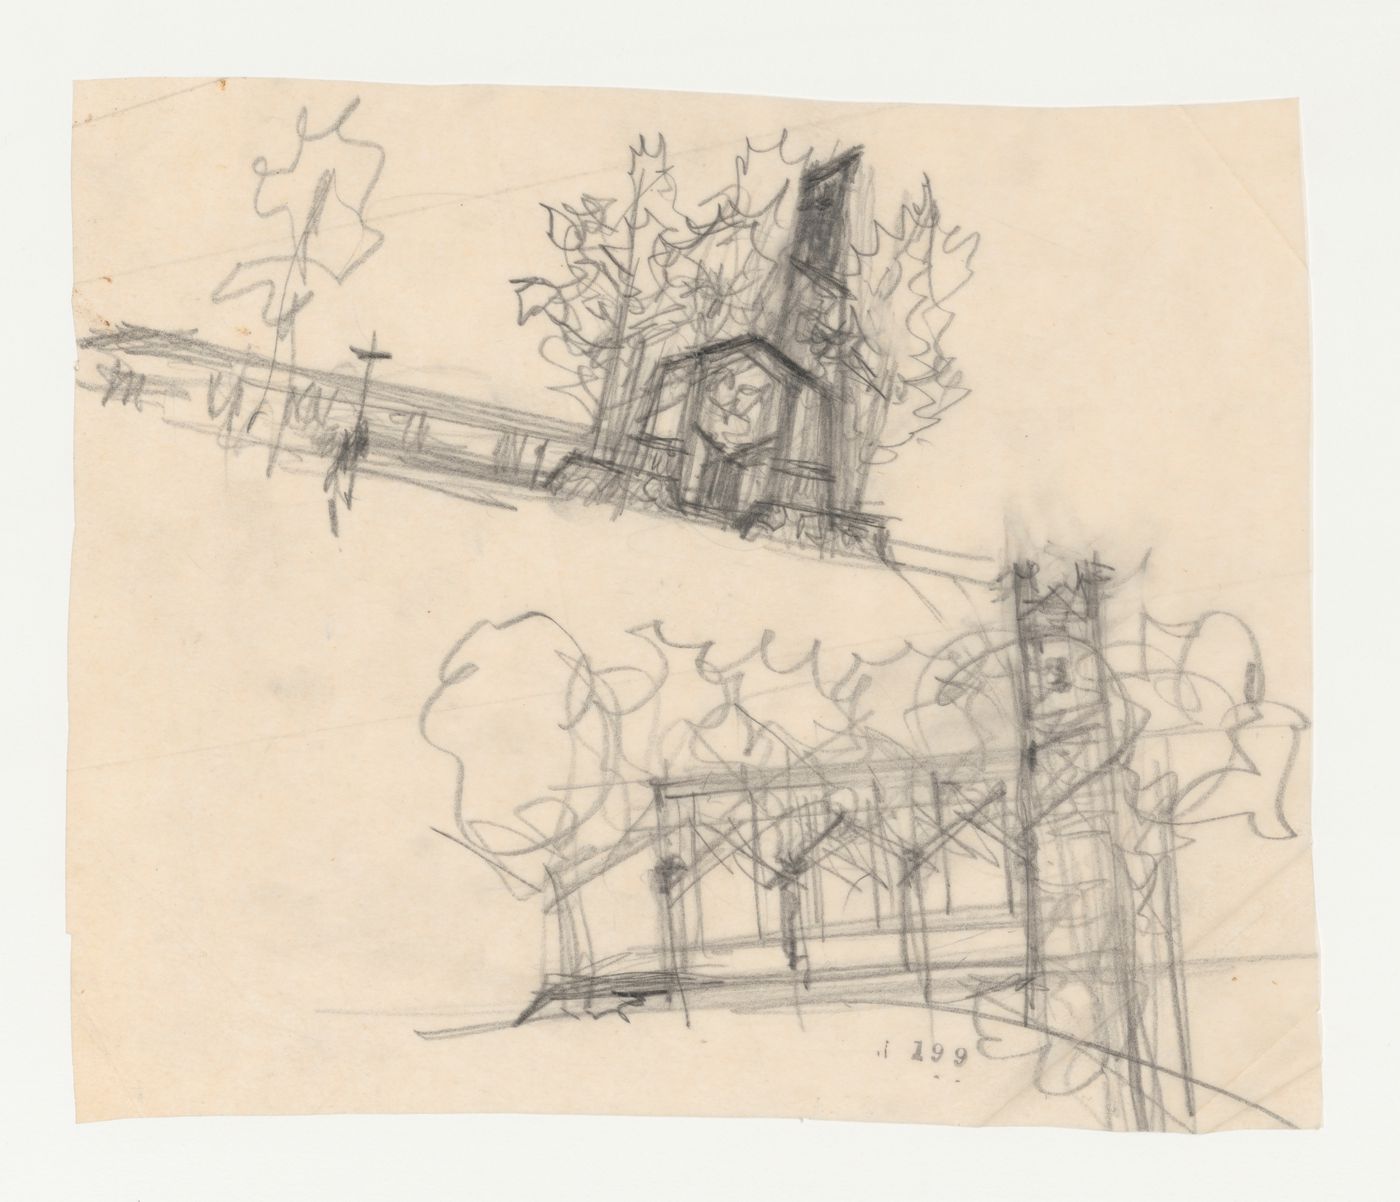 Wayfarers' Chapel, Palos Verdes, California: Two conceptual sketches for exterior elevations